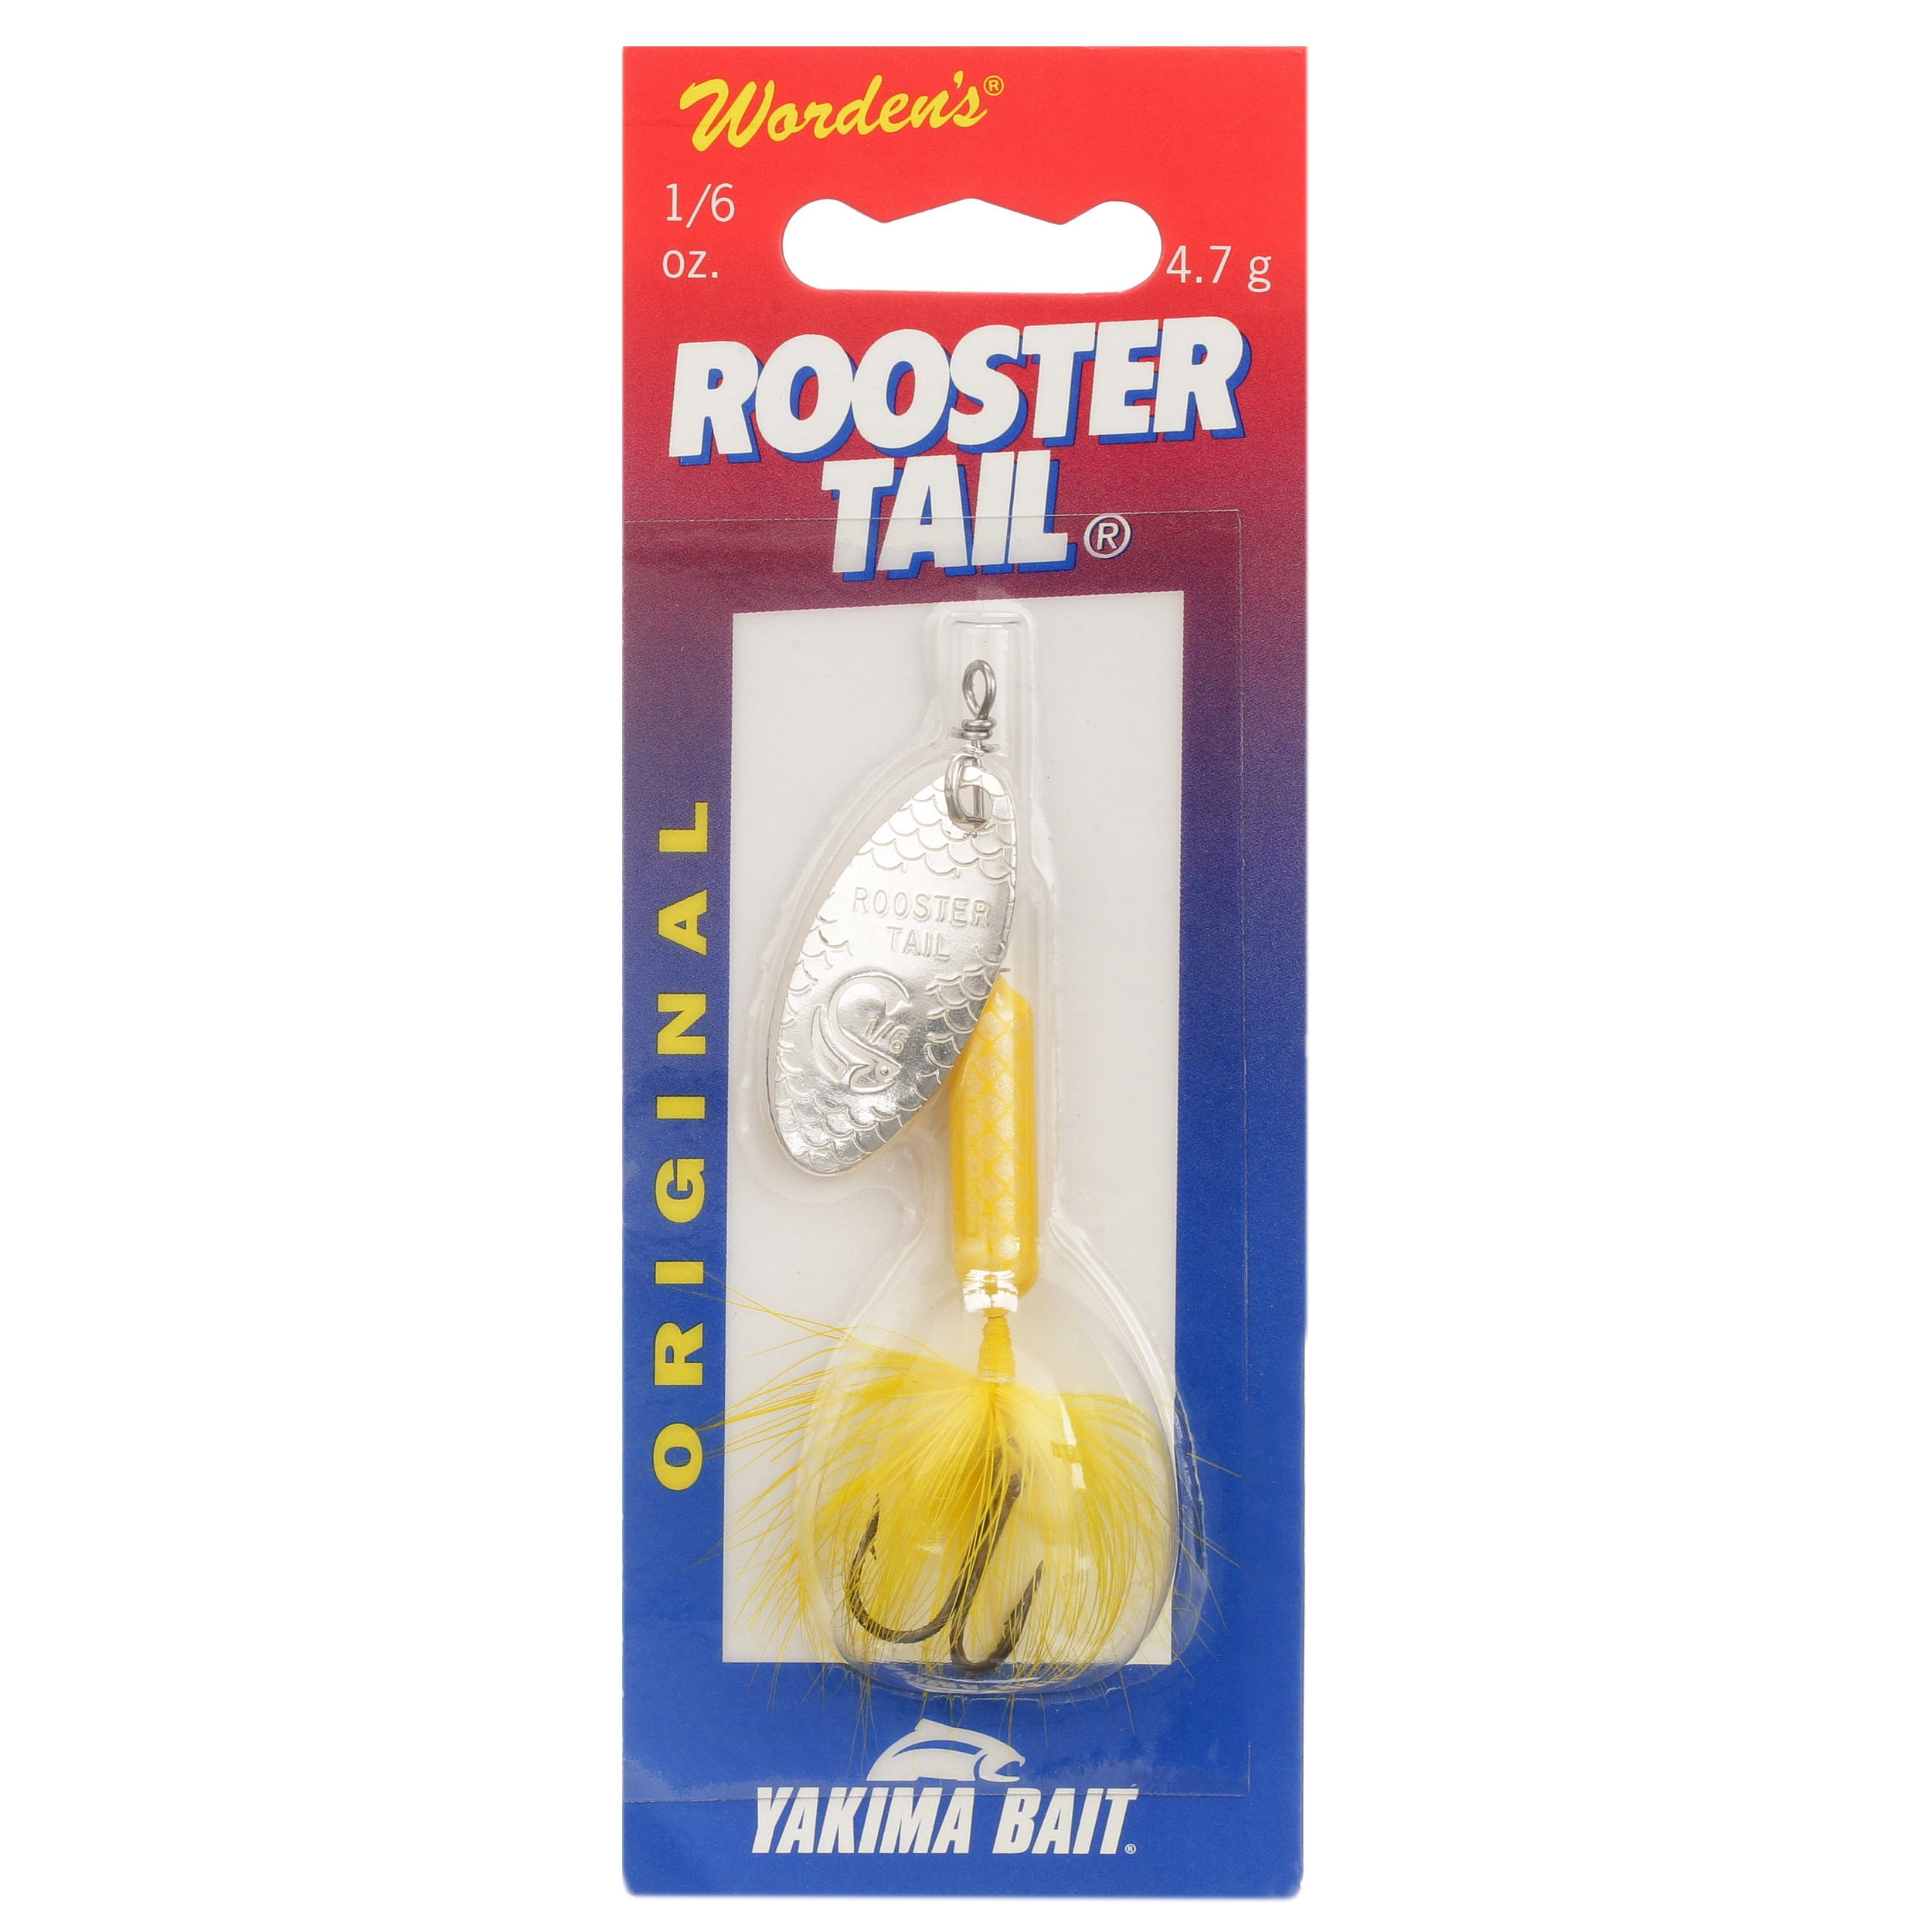 Worden's Original Rooster Tail - 1/4 oz. - Electric Chicken